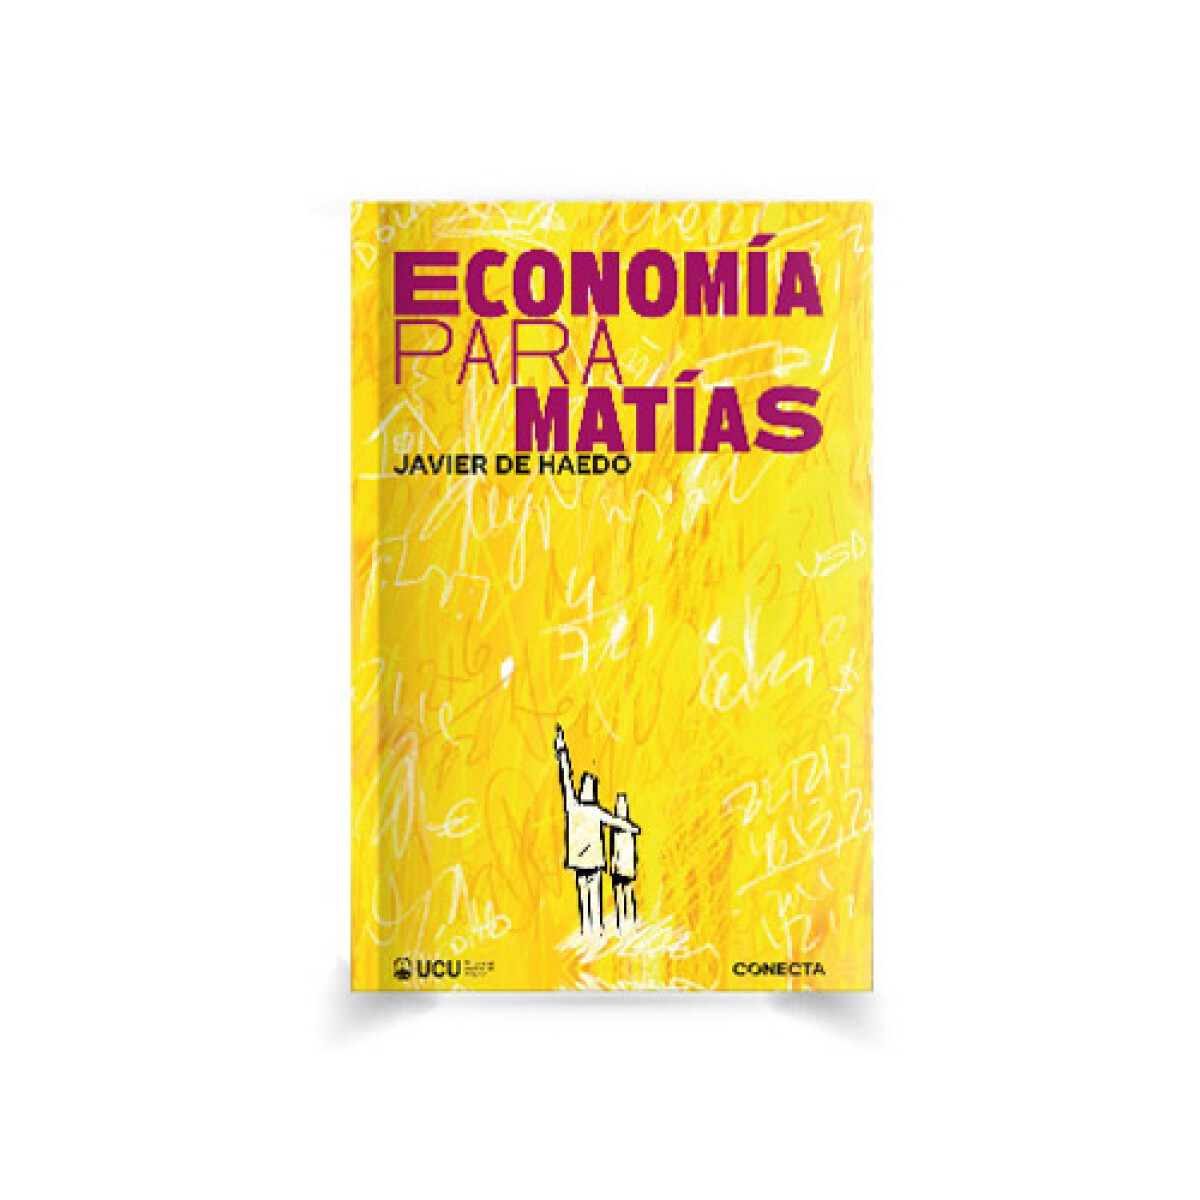 Libro Economía para Matías Javier de Haedo - 001 